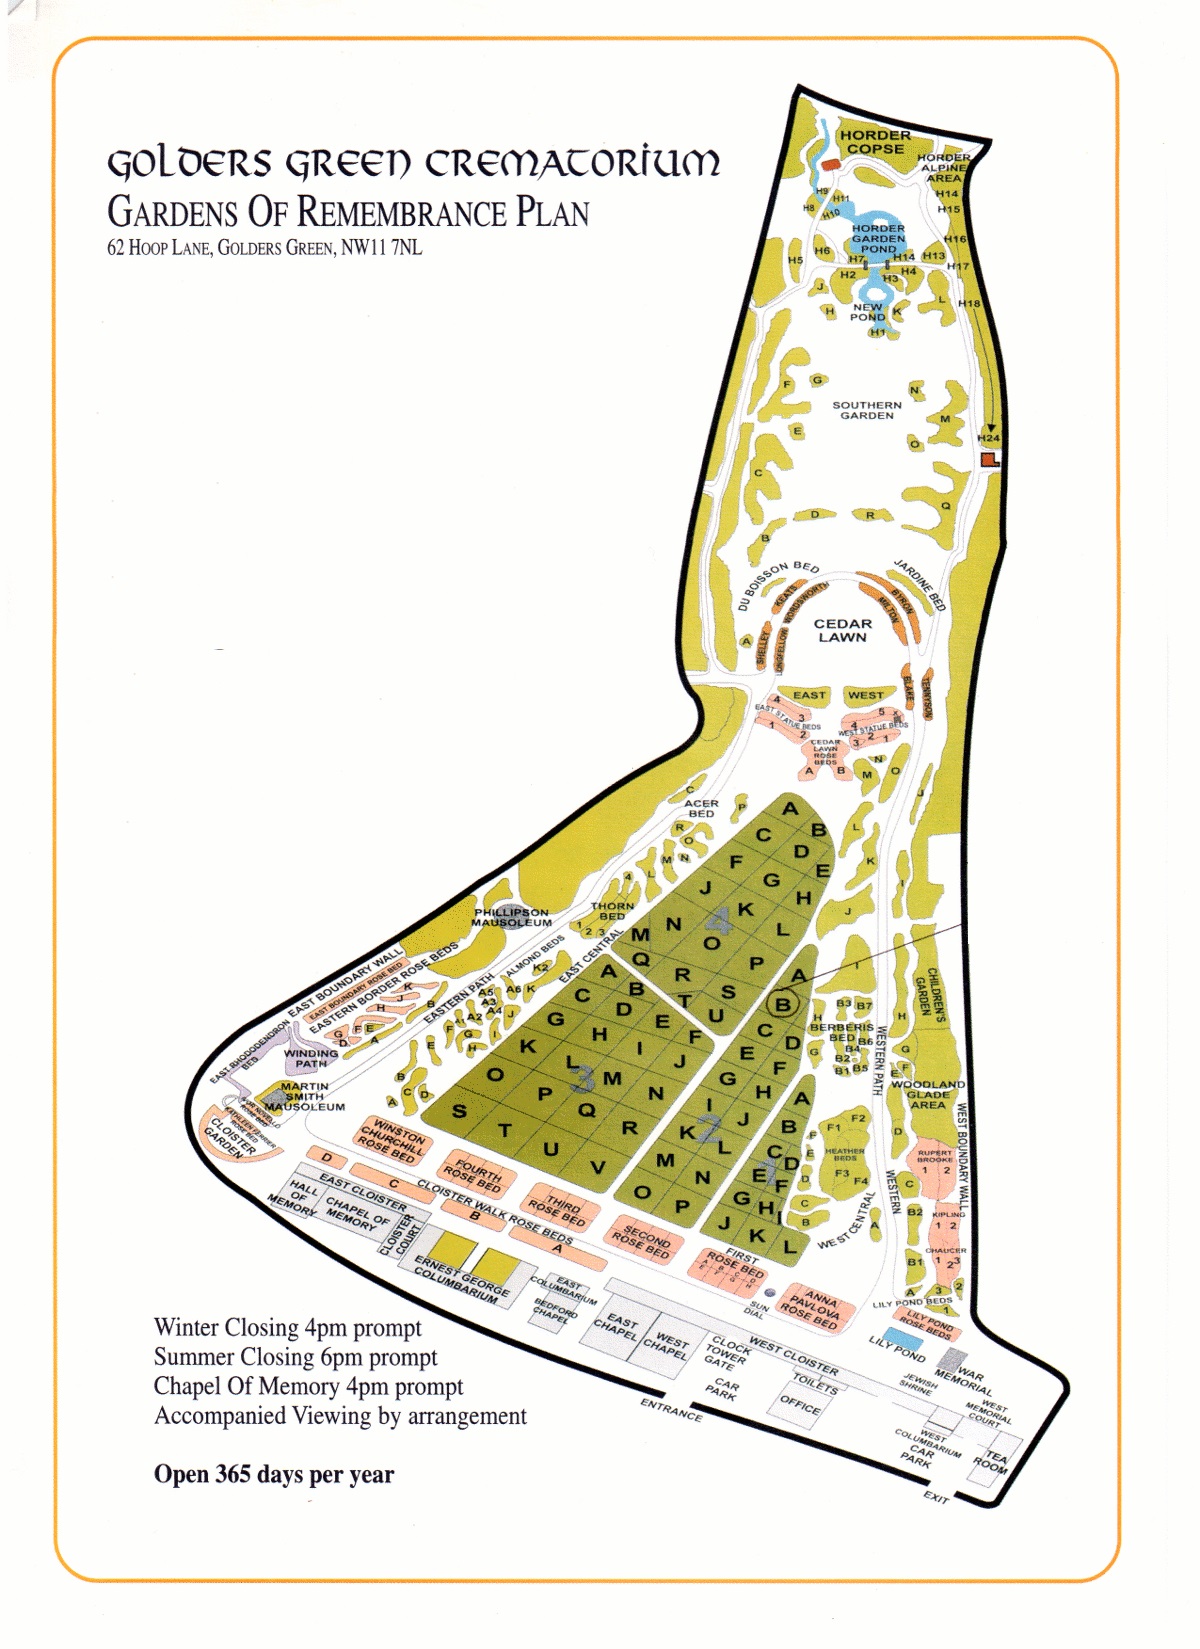 Cemetery map of Golders Green Crematorium in London, England.